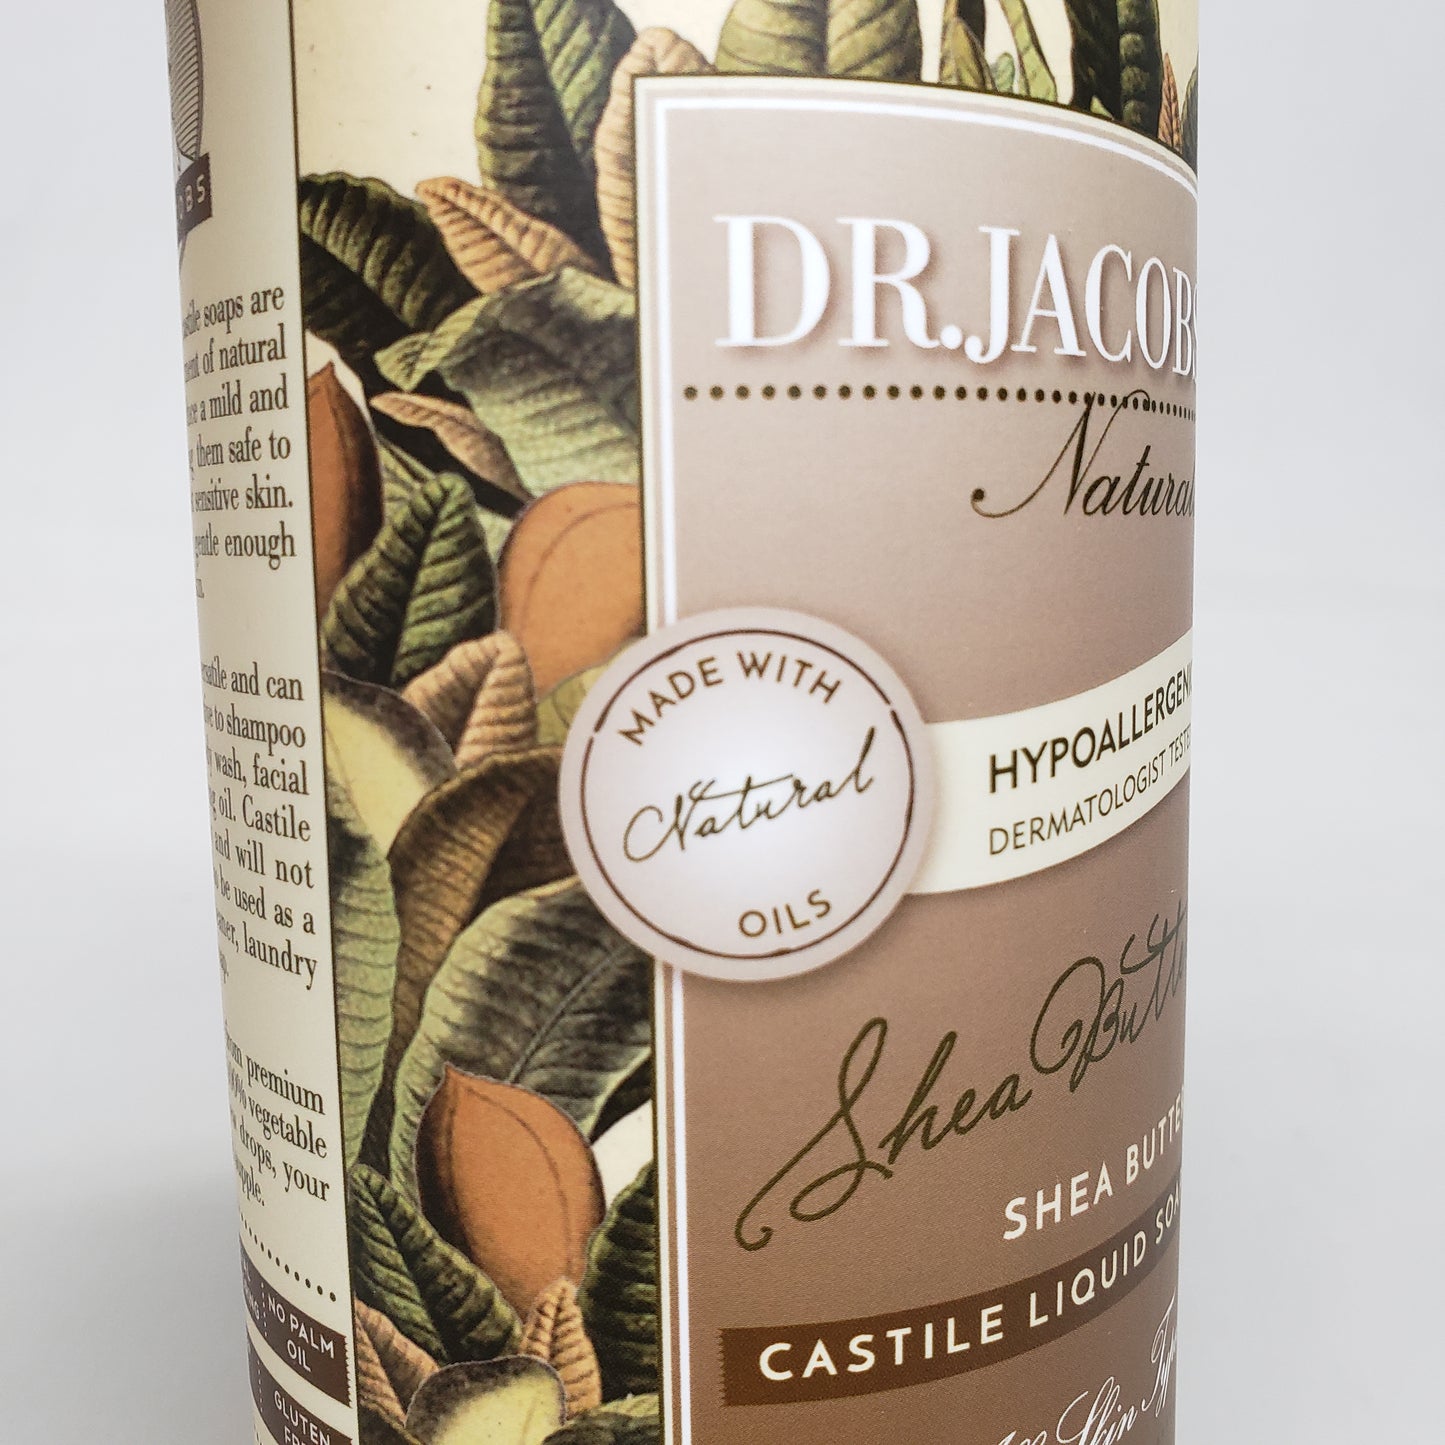 DR. JACOBS NATURALS Shea Butter Castile Liquid Soap 32 oz Hypoallergenic (New)